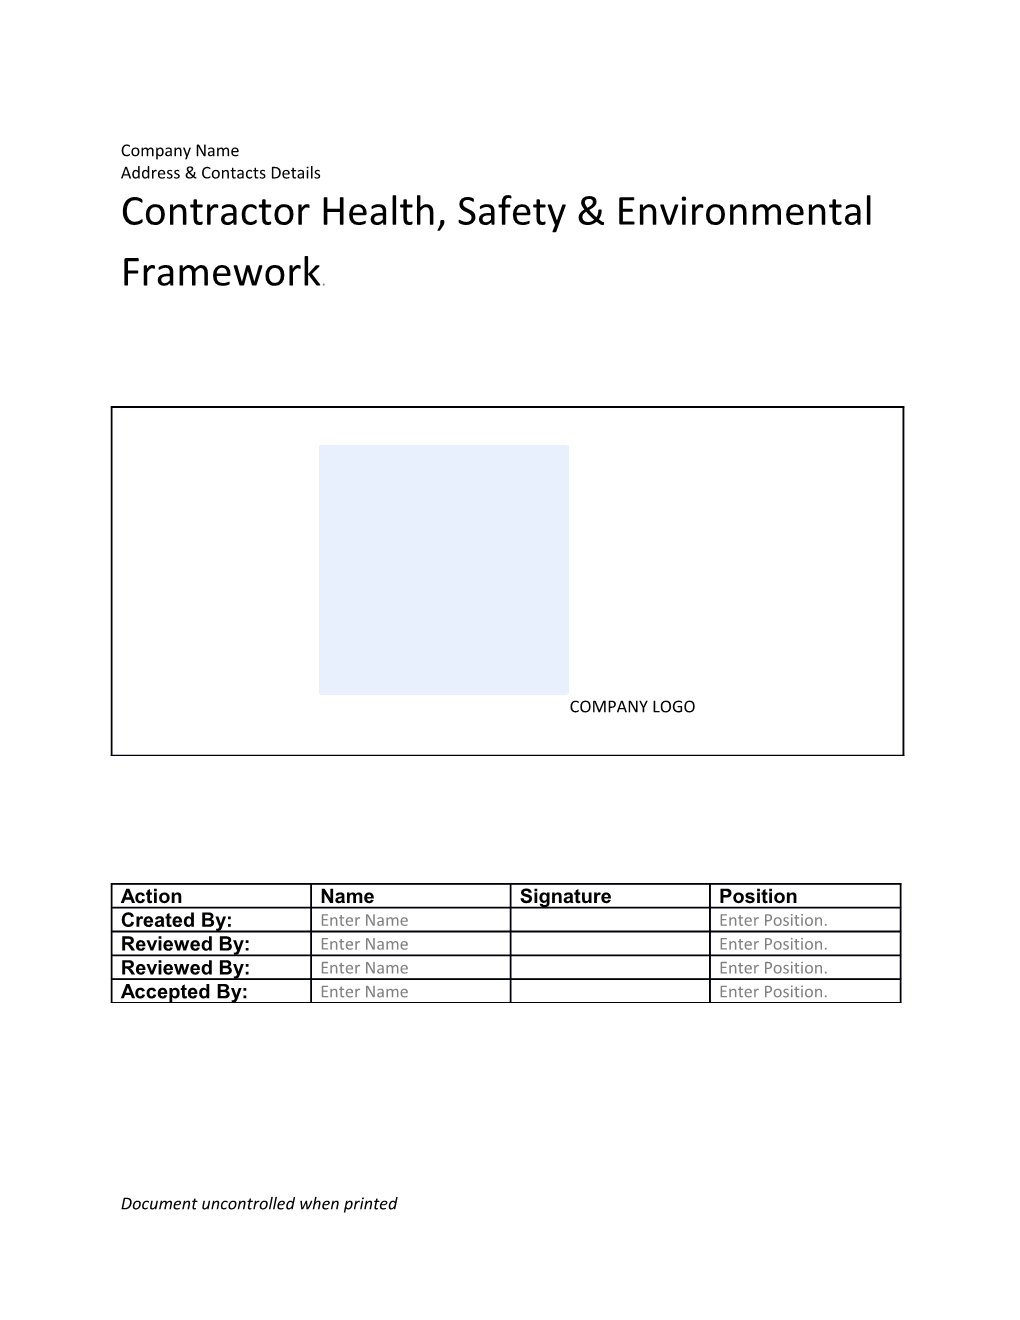 Contractor Health, Safety & Environmental Framework